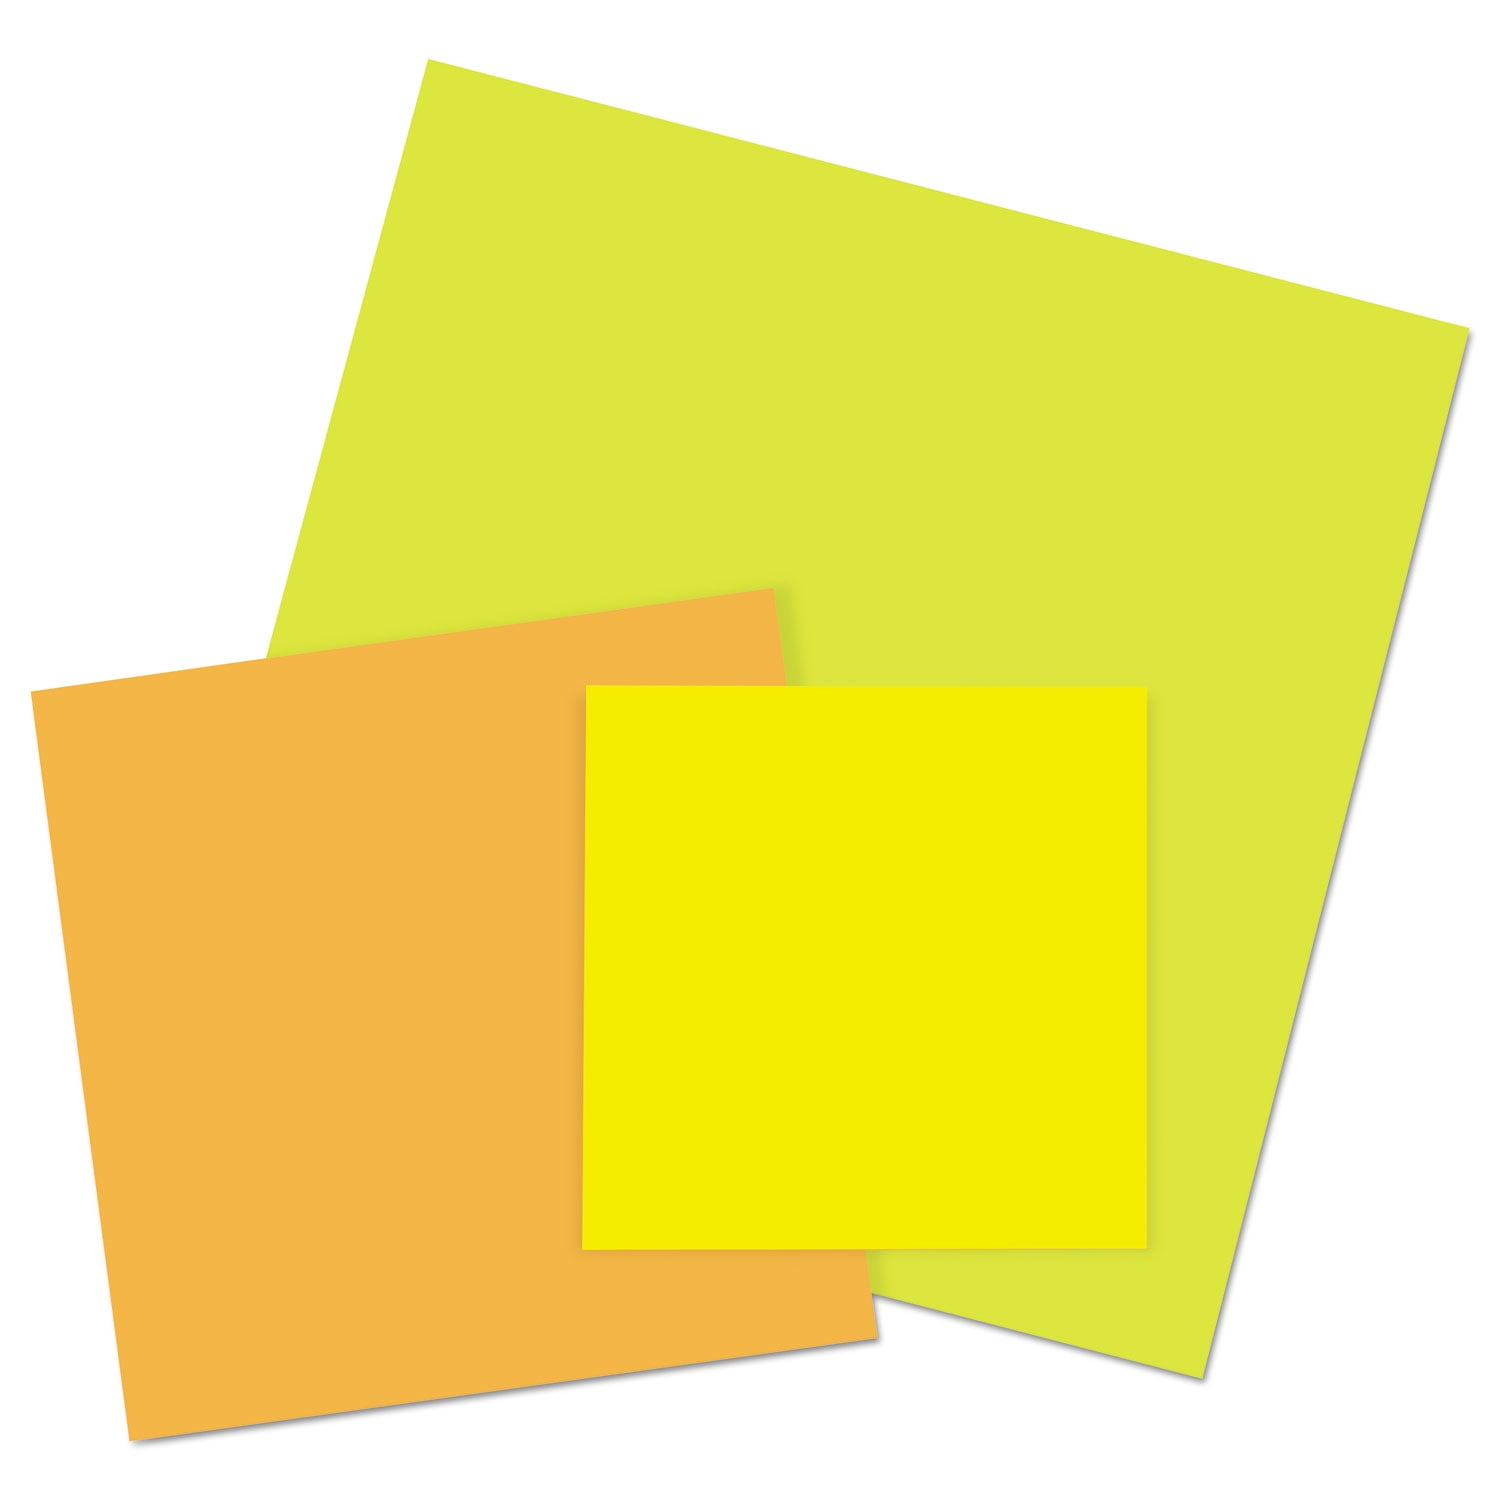 Yellow Sticky Note Post-It Graphic by FeistyUnicornDesigns